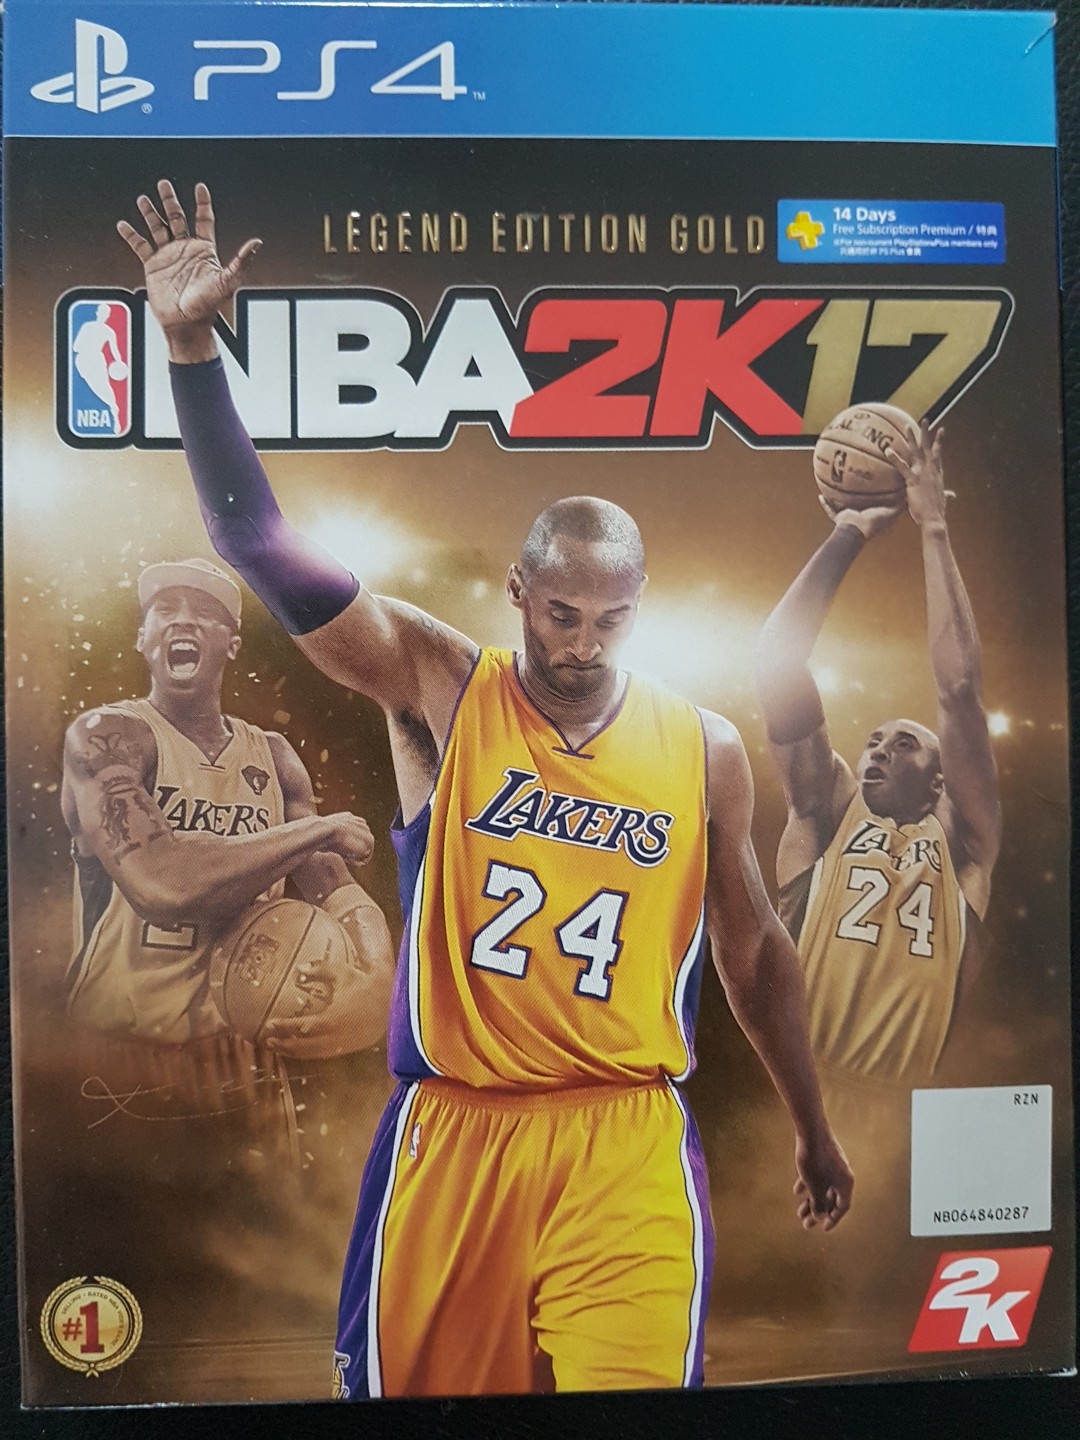 Tgdb Browse Game Nba 2k17 Legend Edition Gold Steelbook